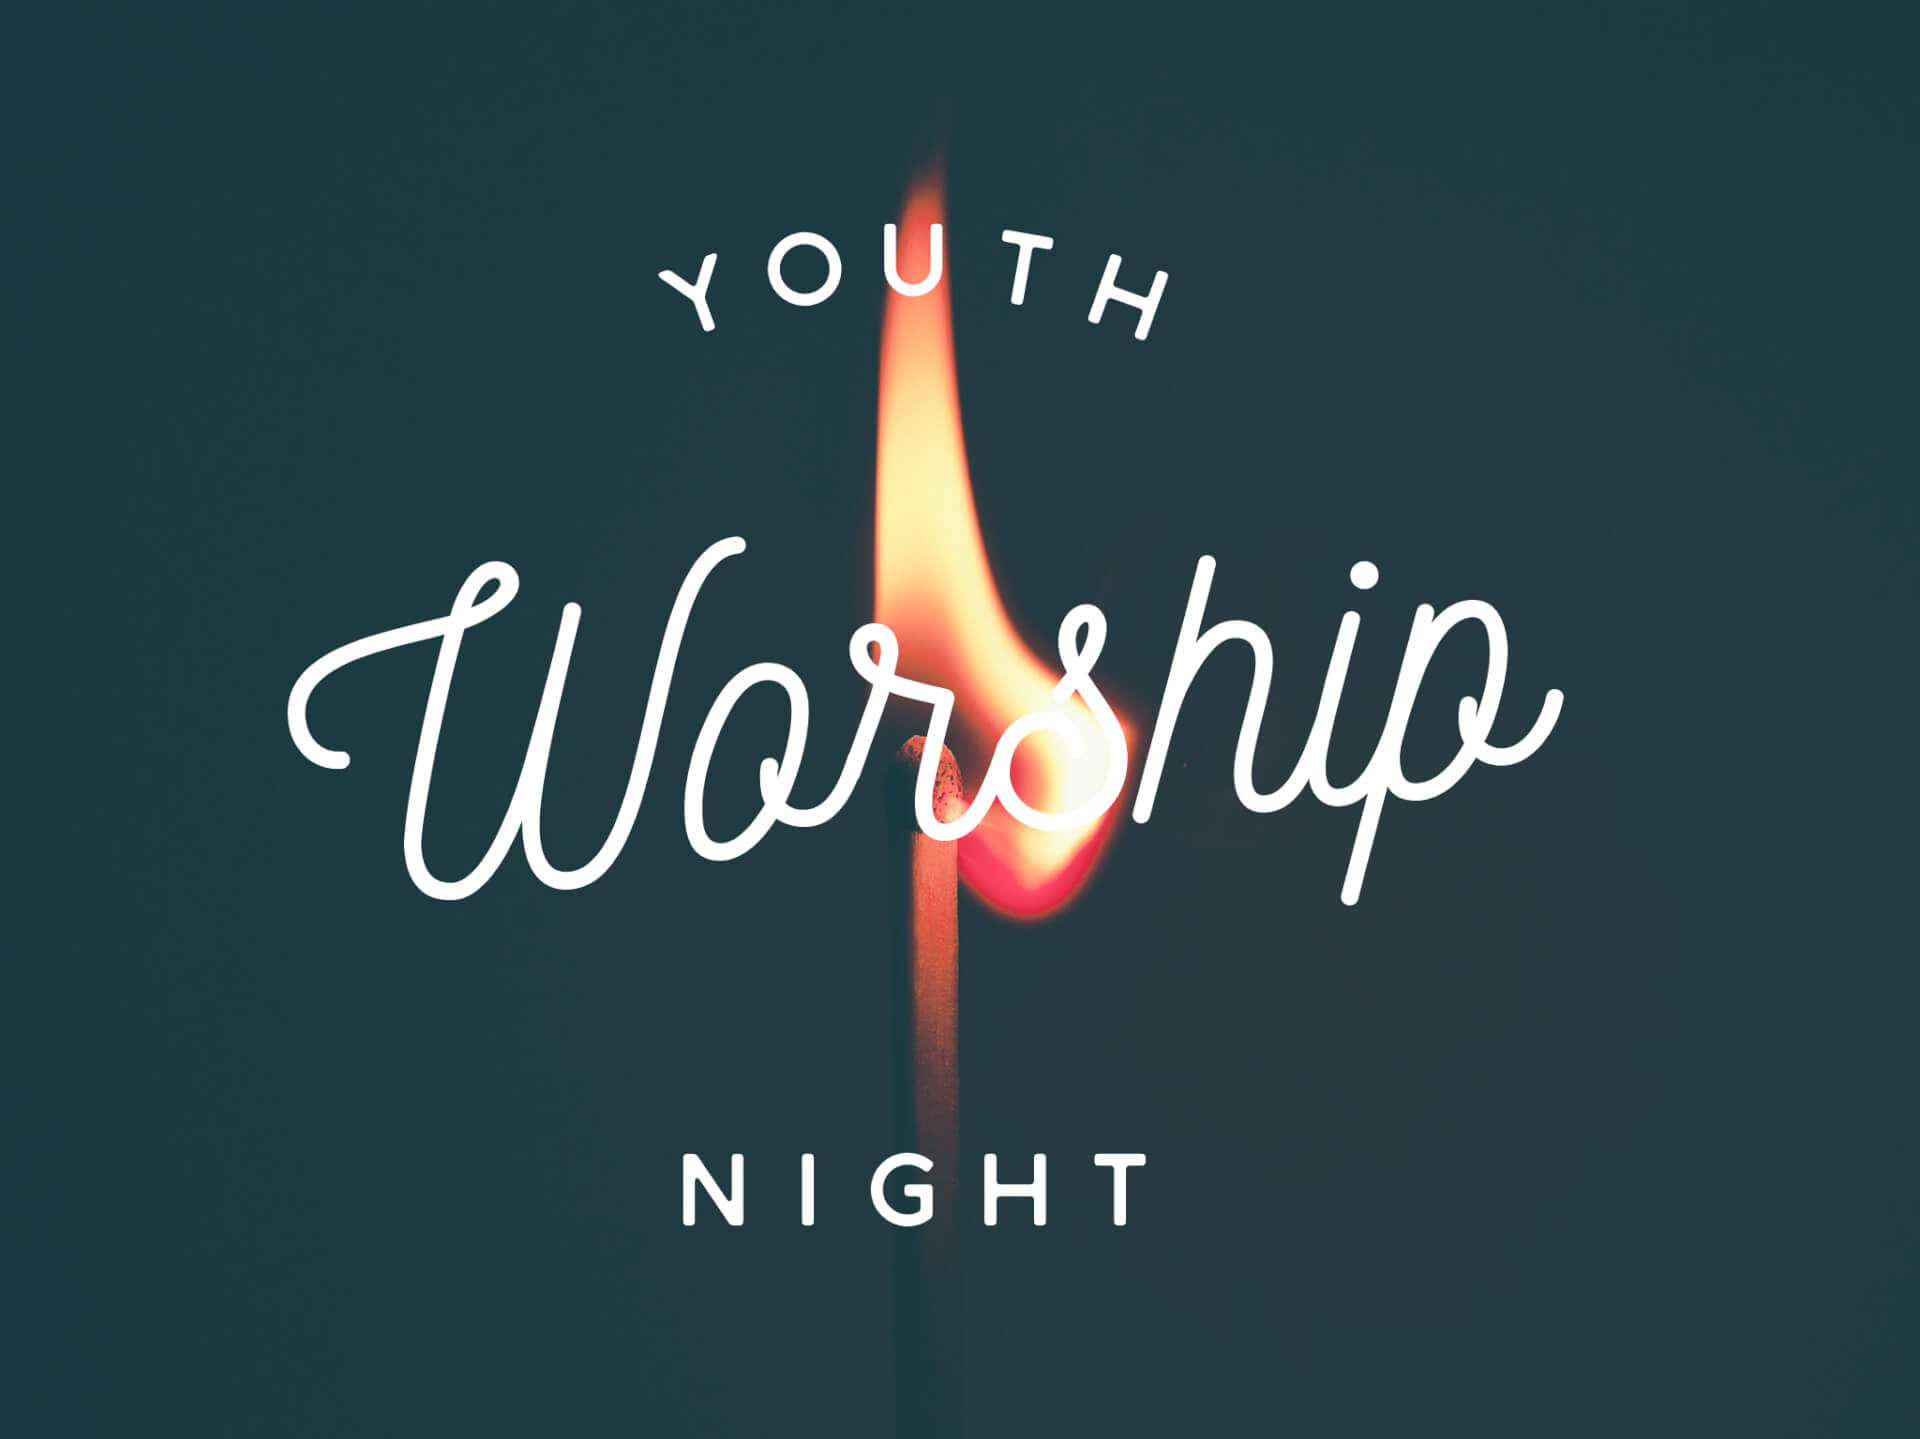 Youth Worship